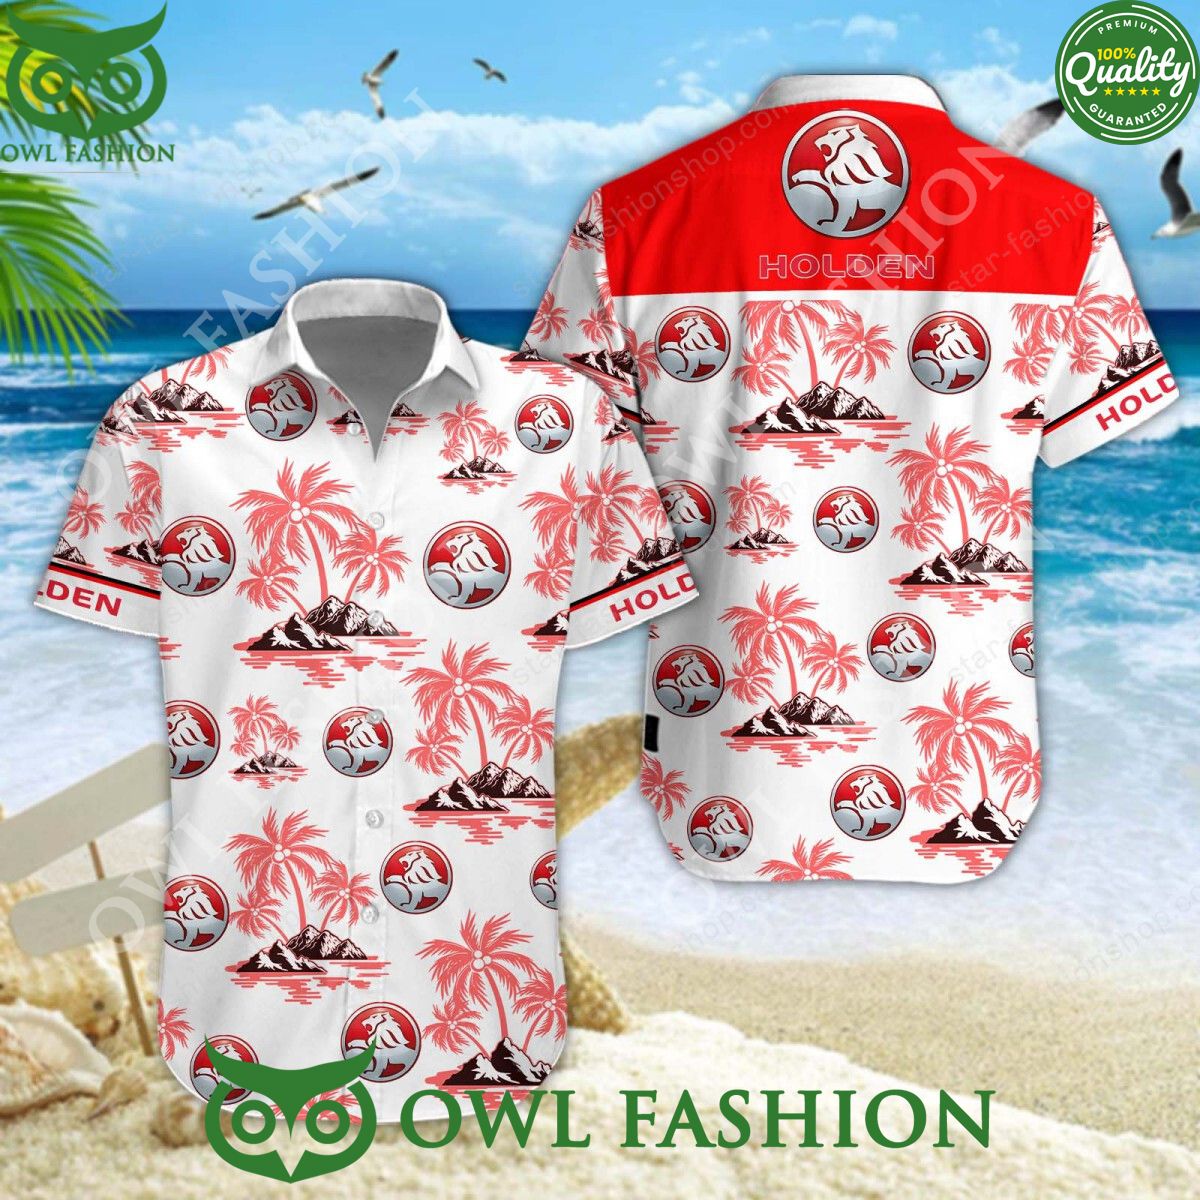 holden australia general motors hawaiian shirt and short 1 2rwEK.jpg